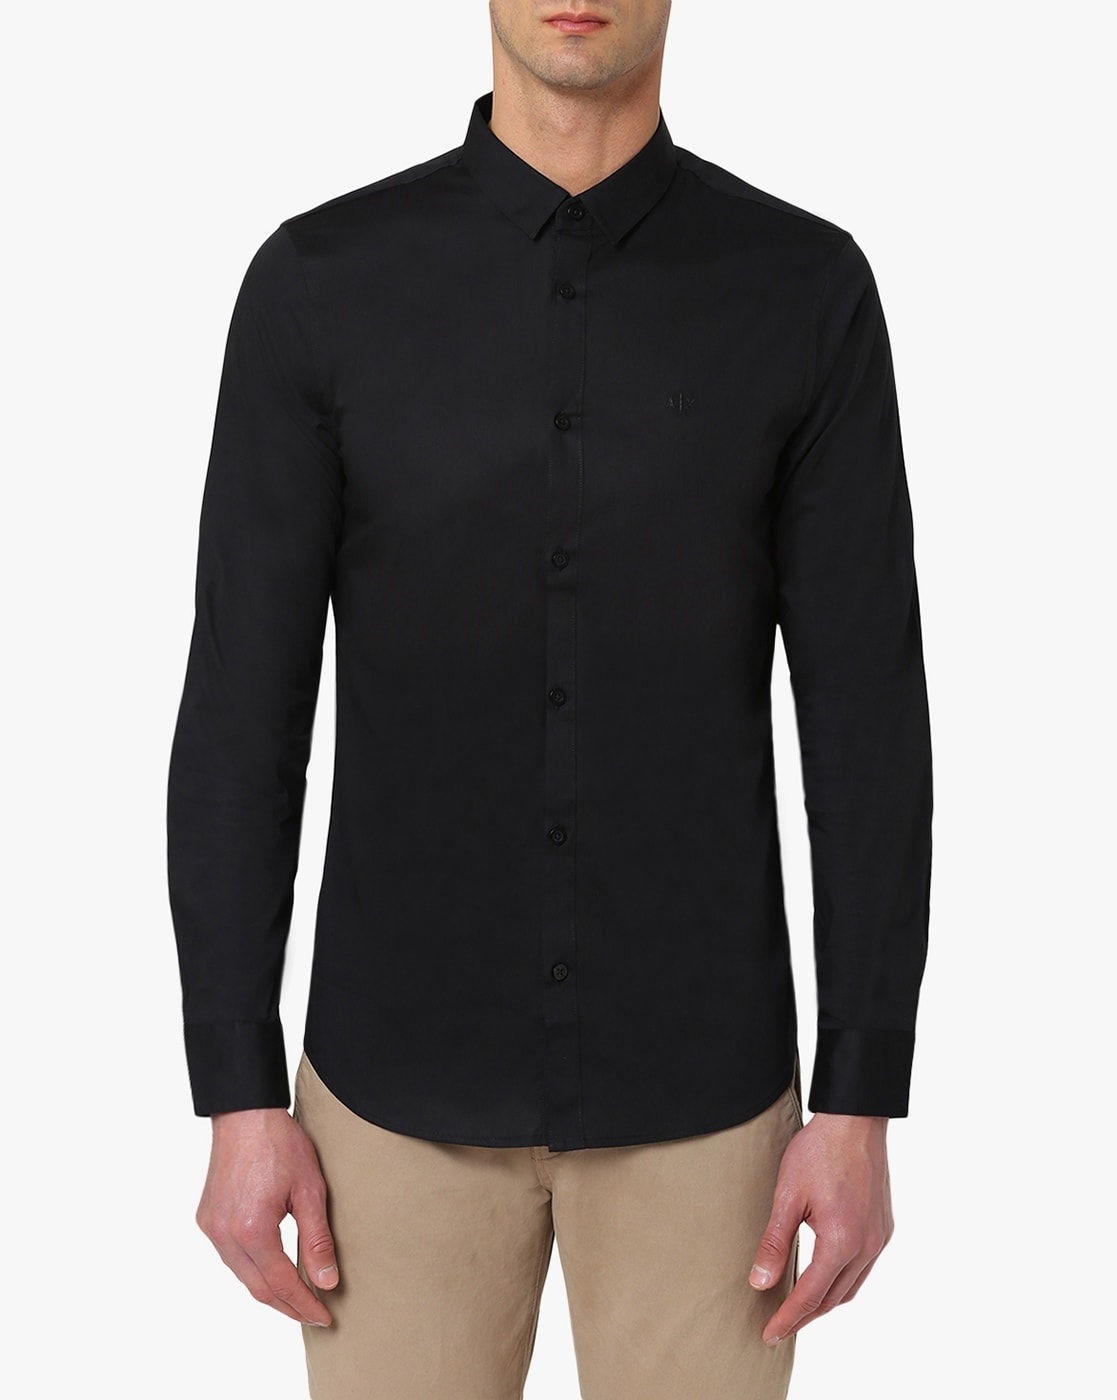 armani exchange shirt black